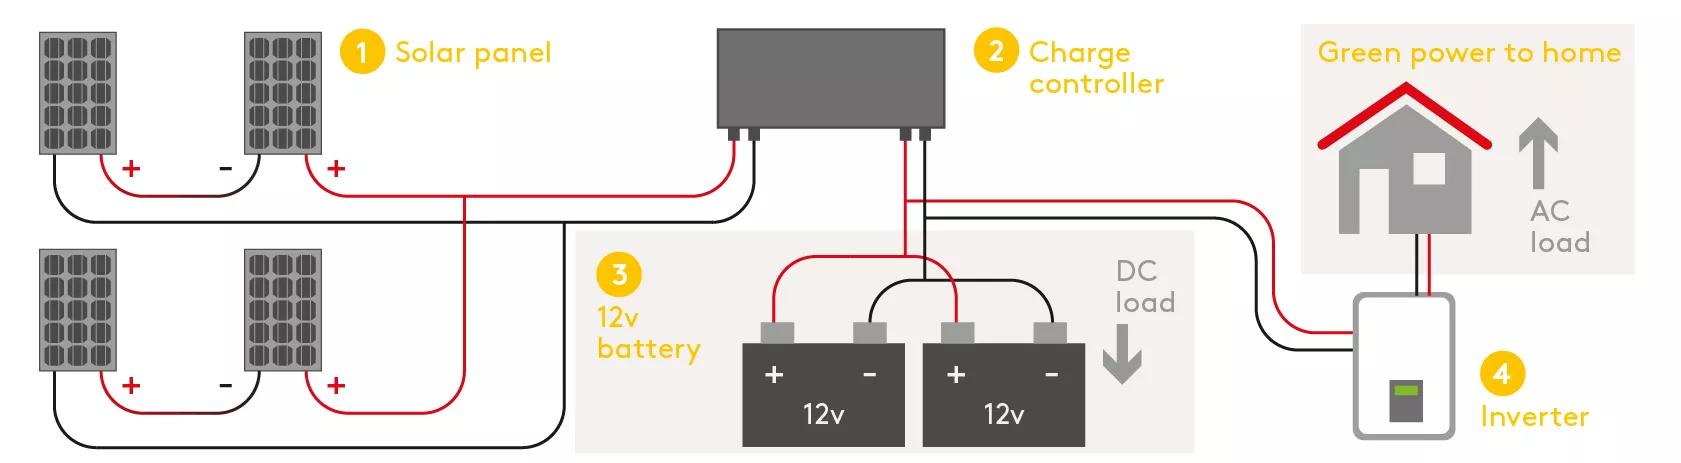 Basic solar panel system wiring diagram